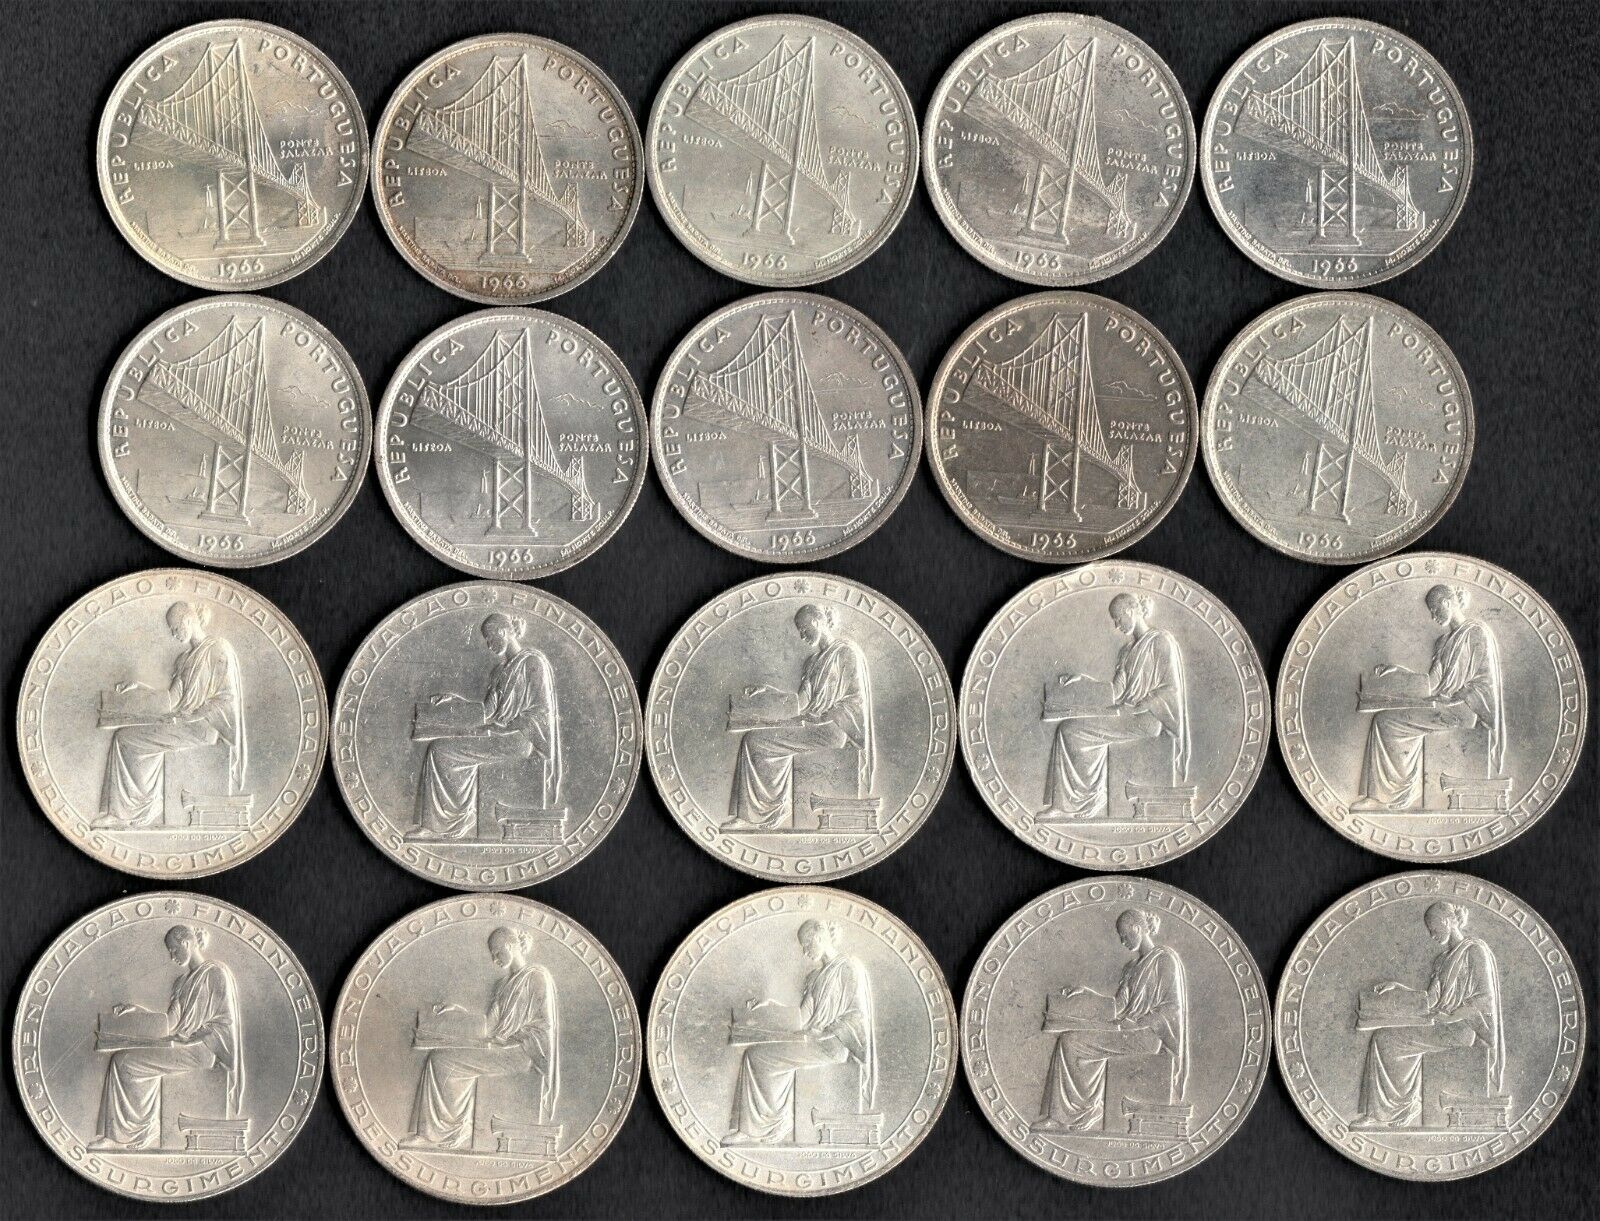 Portugal Silver Coin Lot - 20 Escudos 1953 / 1960  - Unc - 300g - 20 Coins 🇵🇹